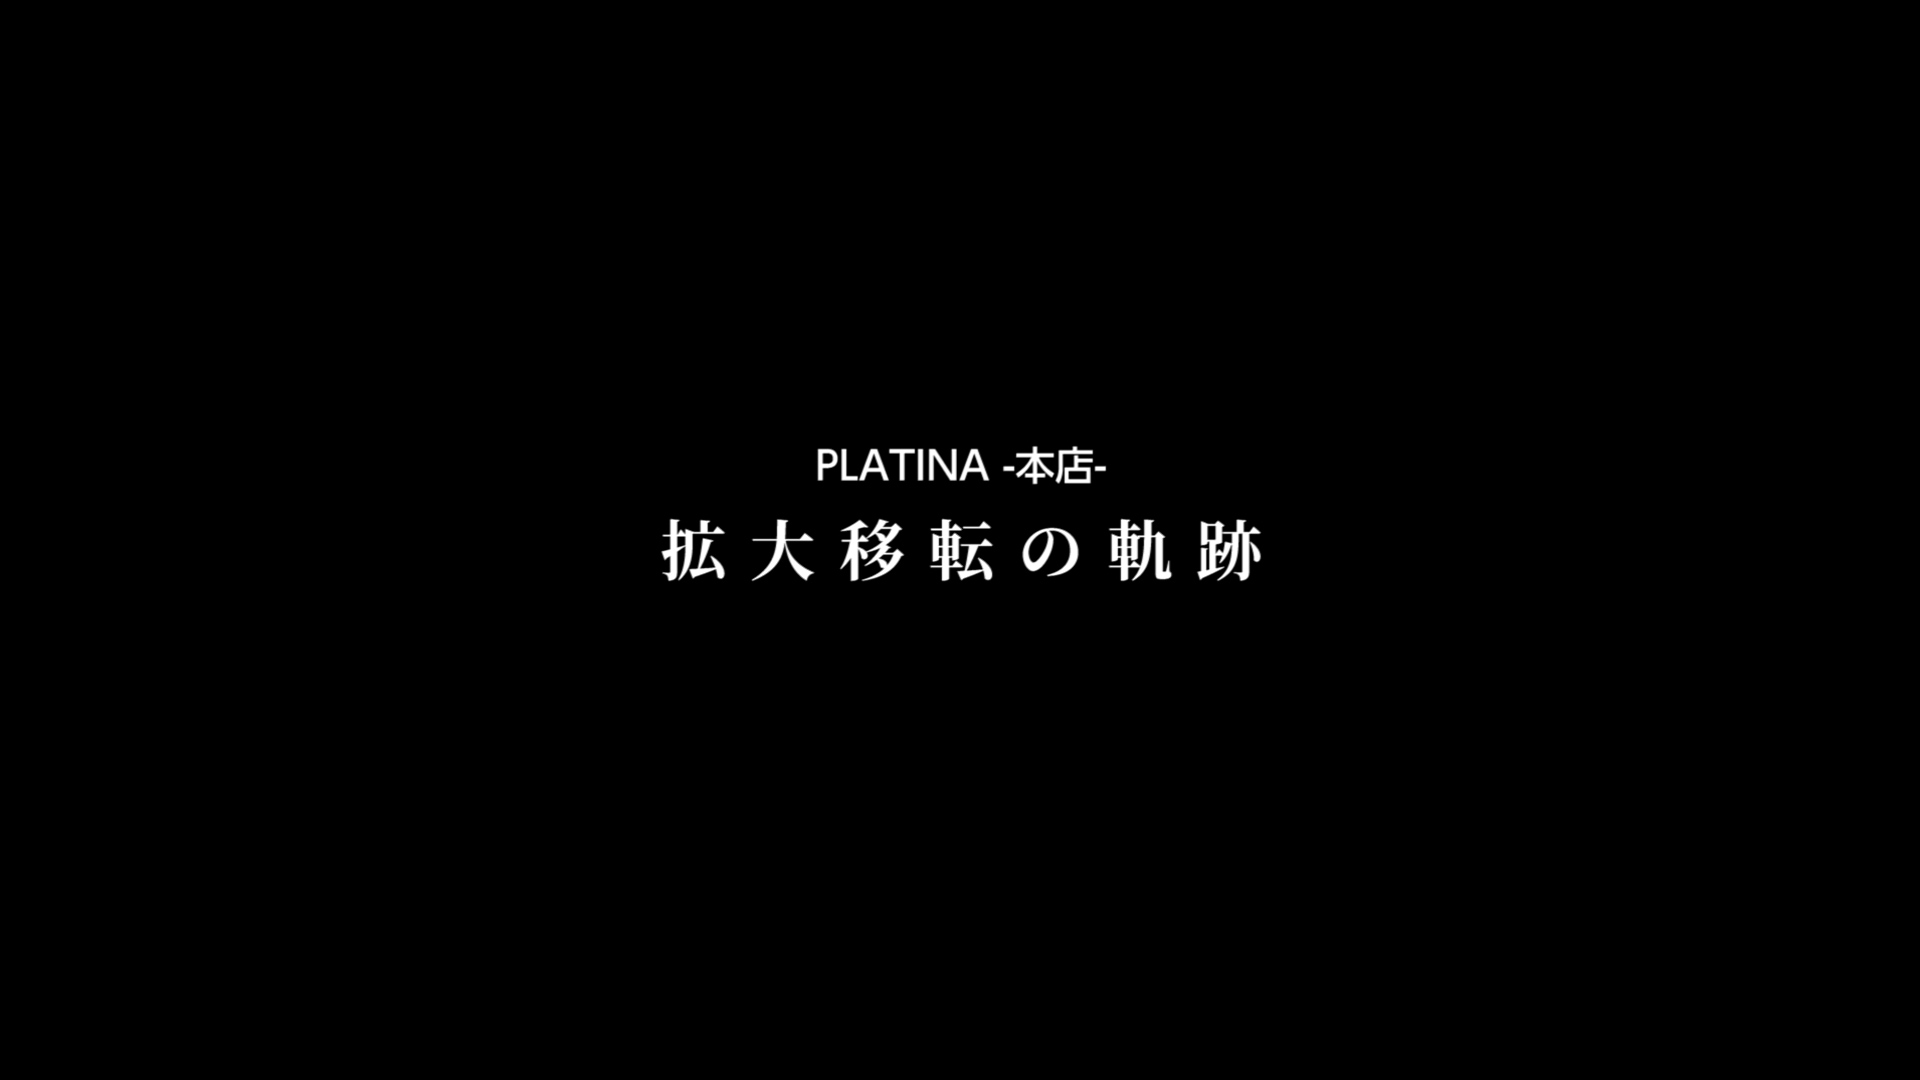 【PLATINA -本店-】拡大移転の軌跡